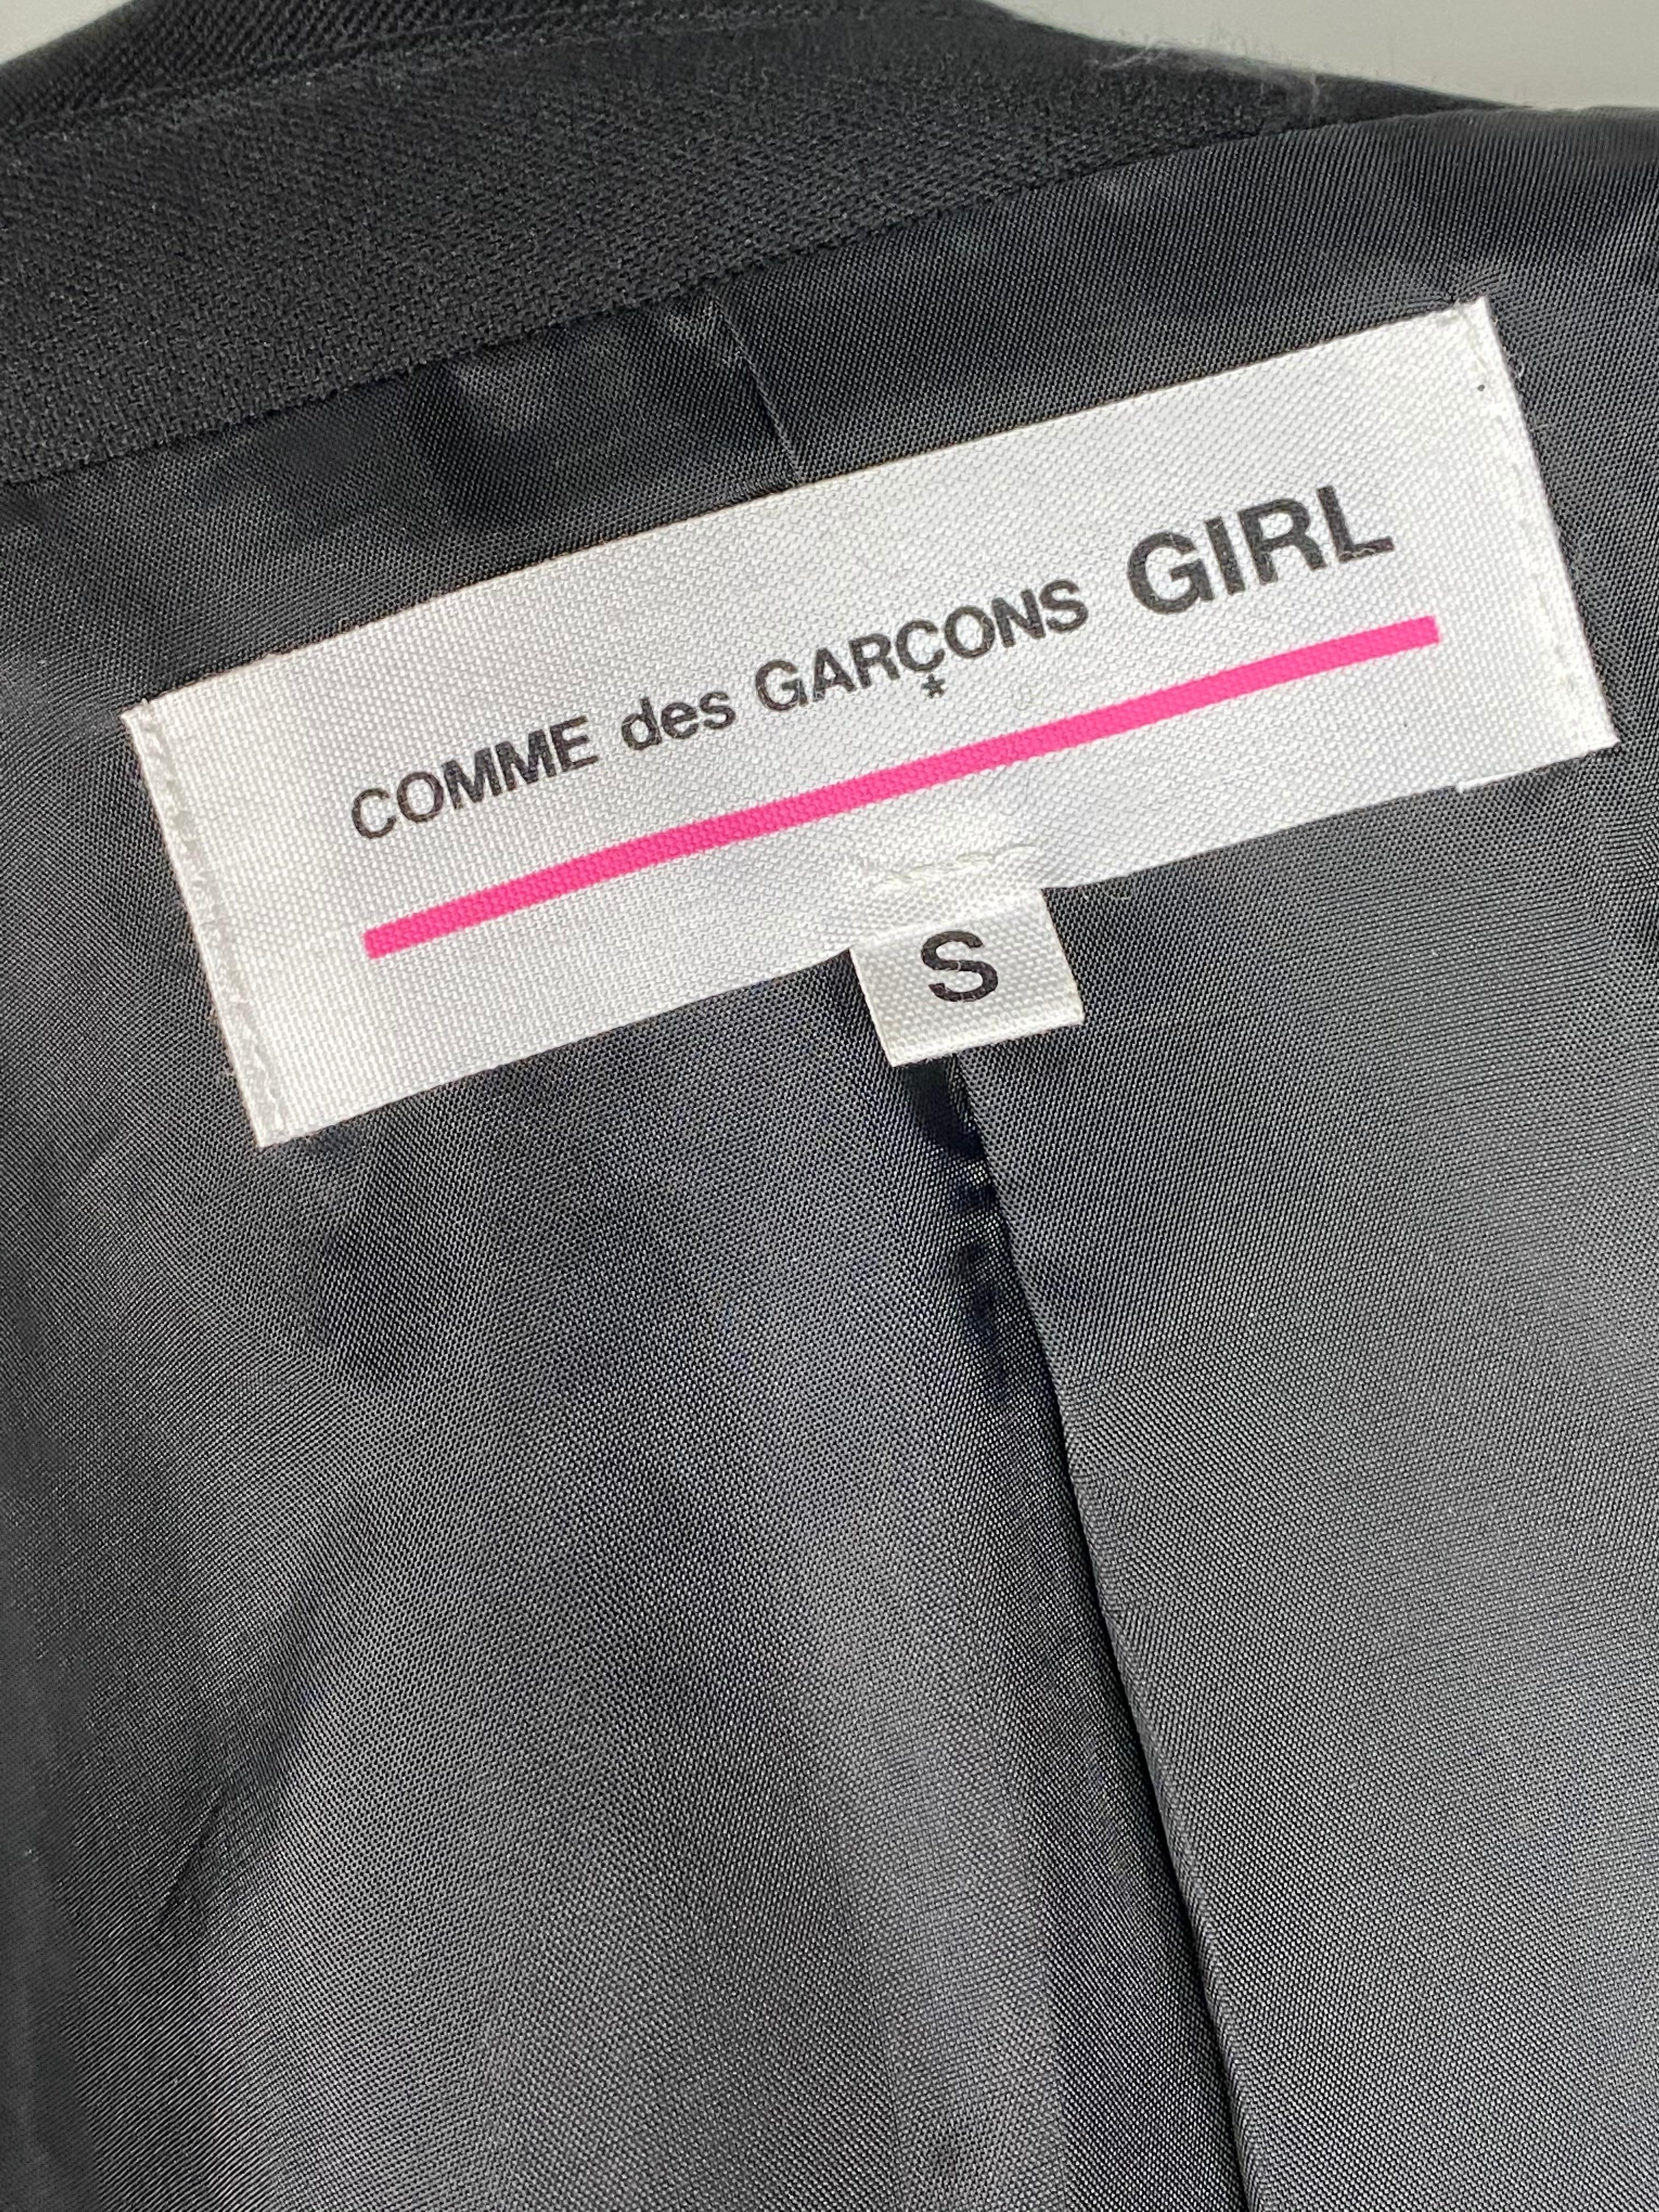 Comme des Garcons GIRL Black Wool Blazer Jacker w/ Buttons Size S For Sale 3